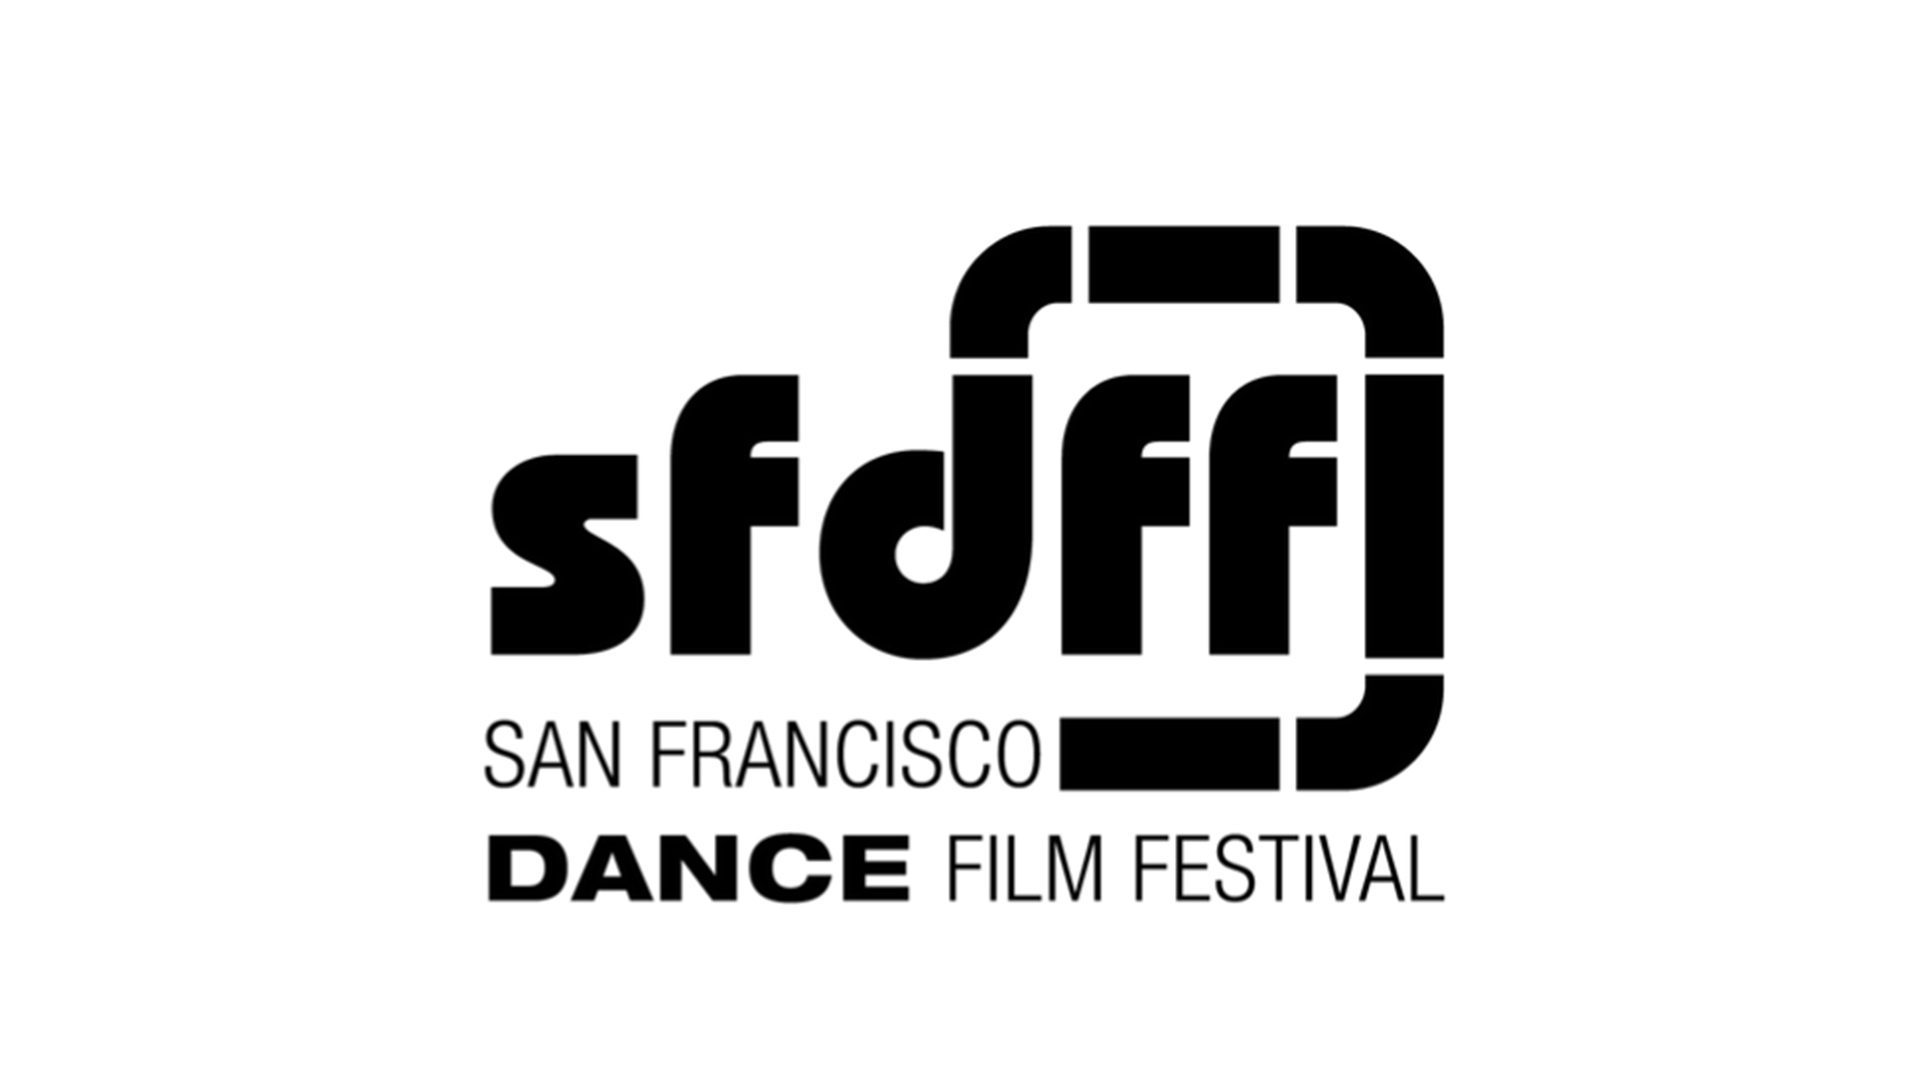 sfdff-logo